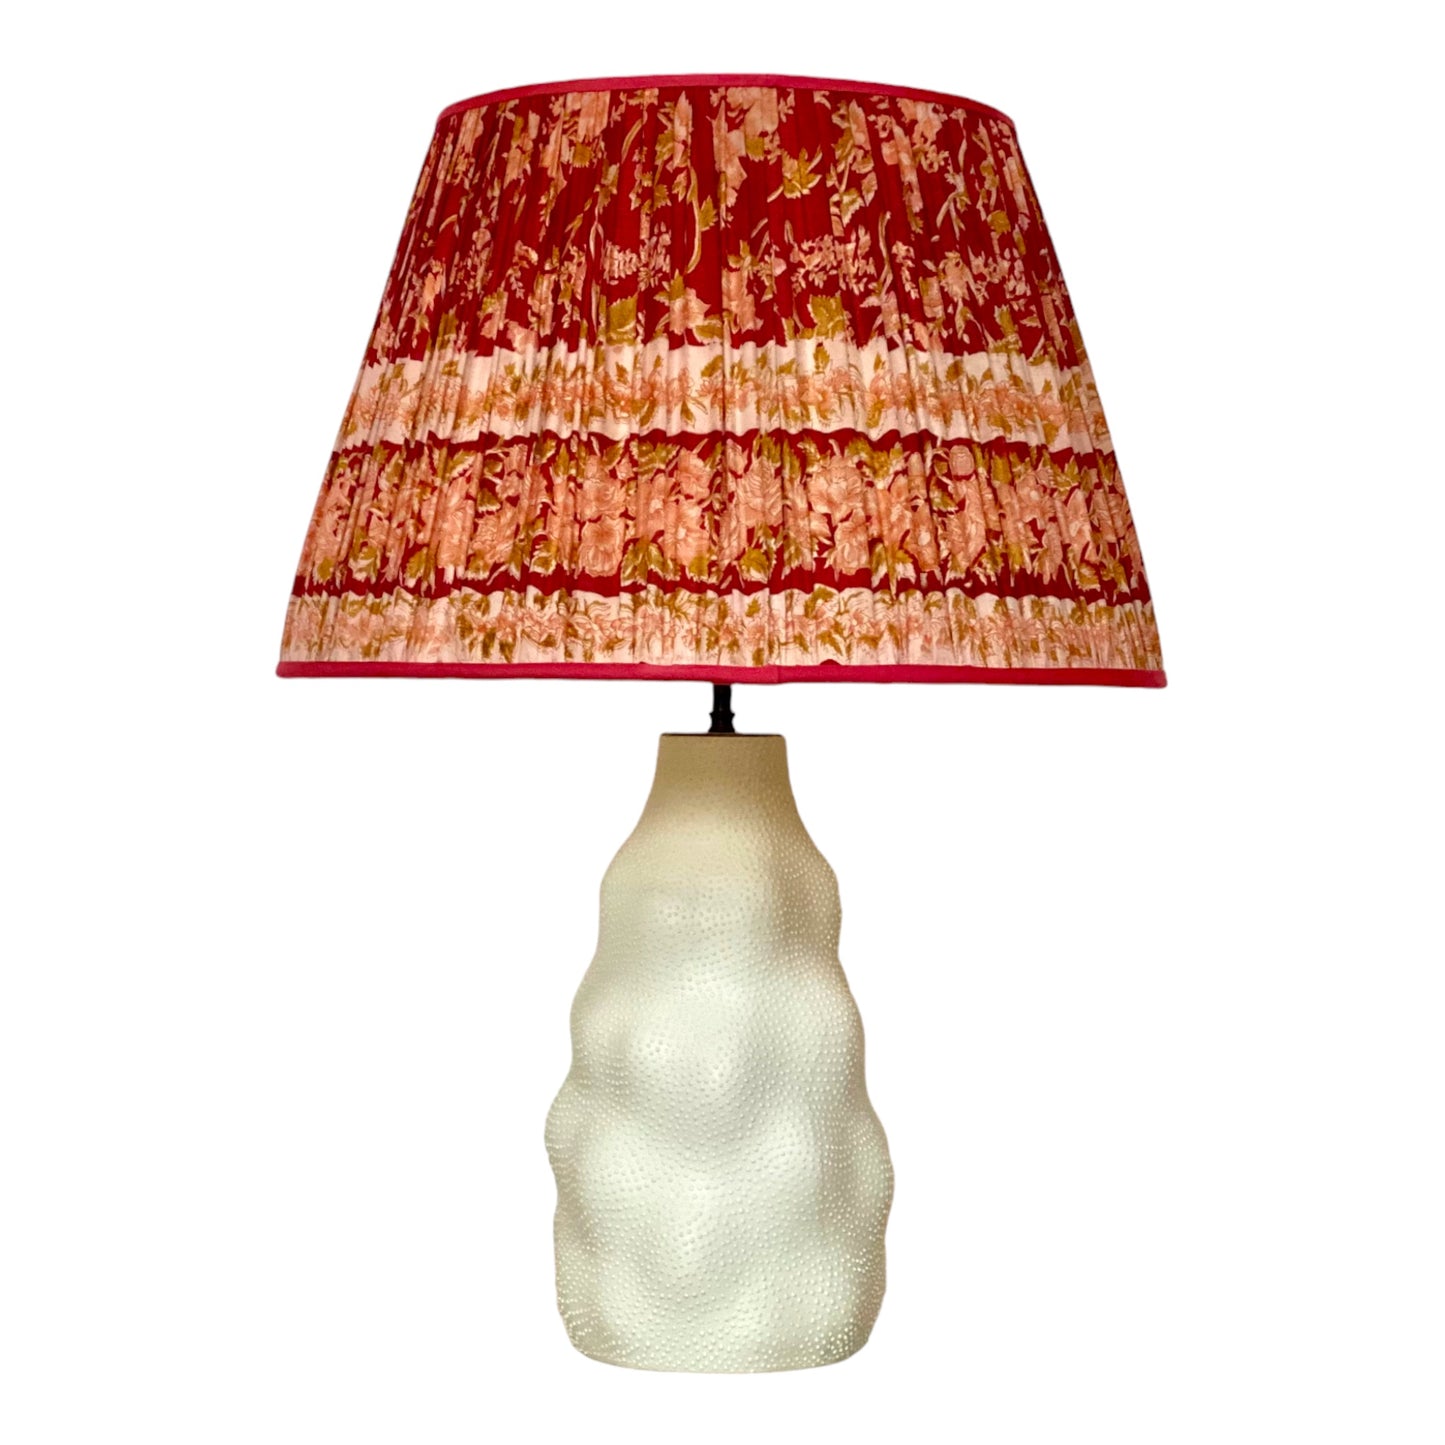 Raspberry lampshade on Iki lamp